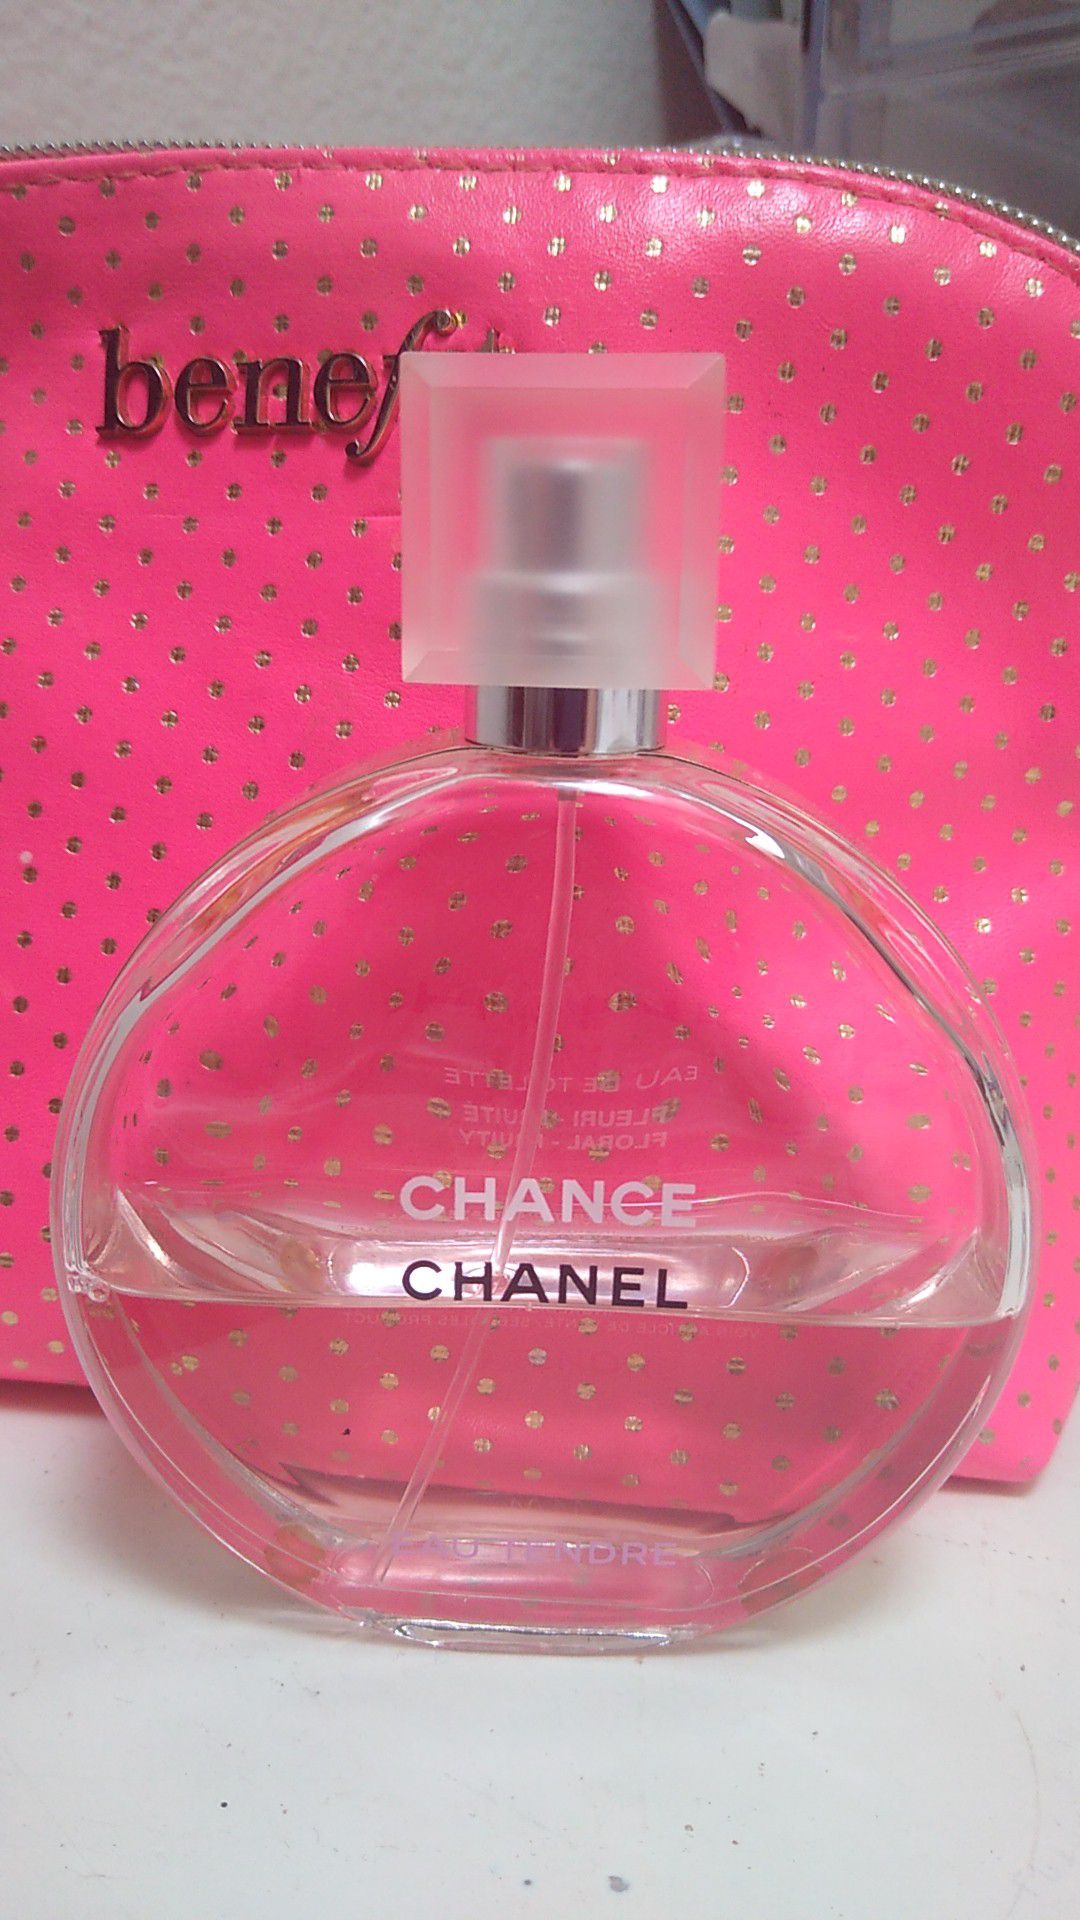 Chanel chance perfume